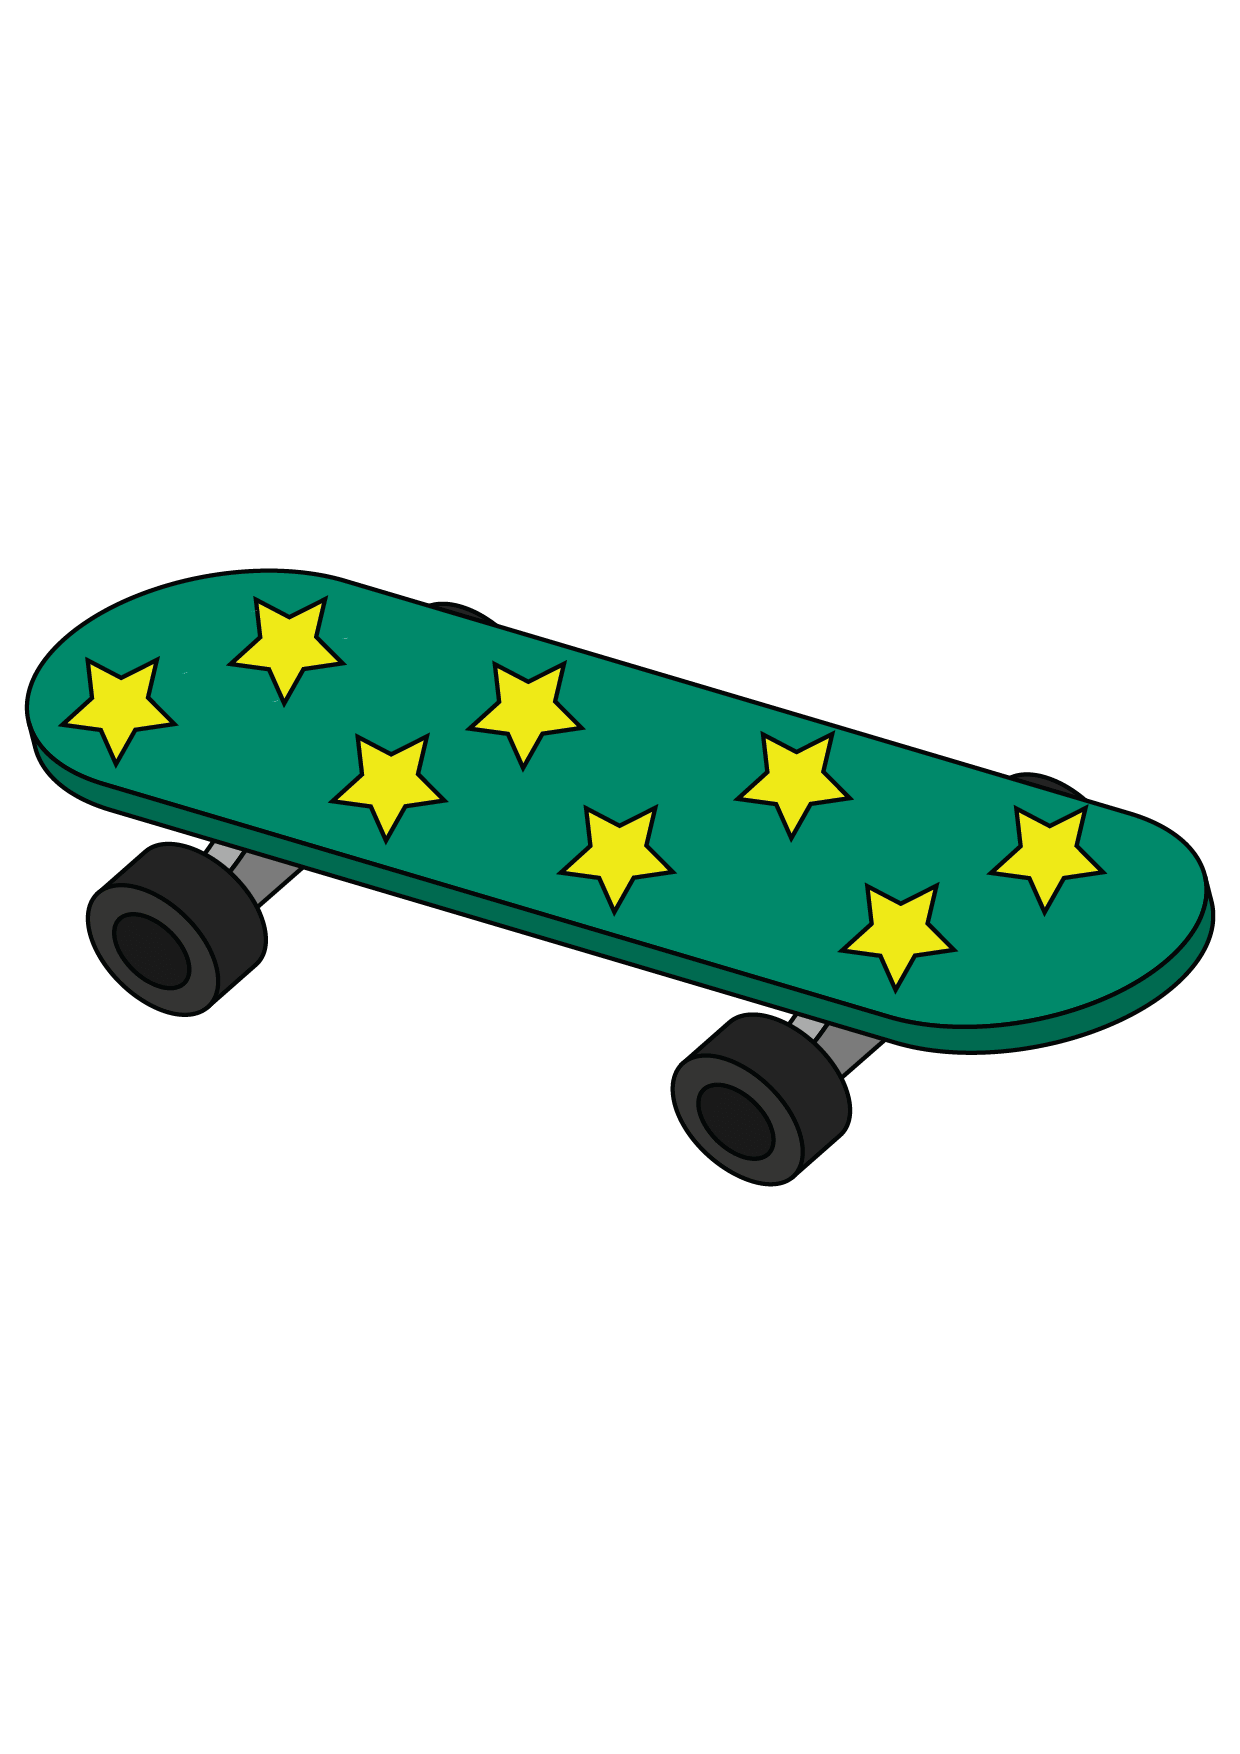 How to Draw A Skateboard Step by Step Printable